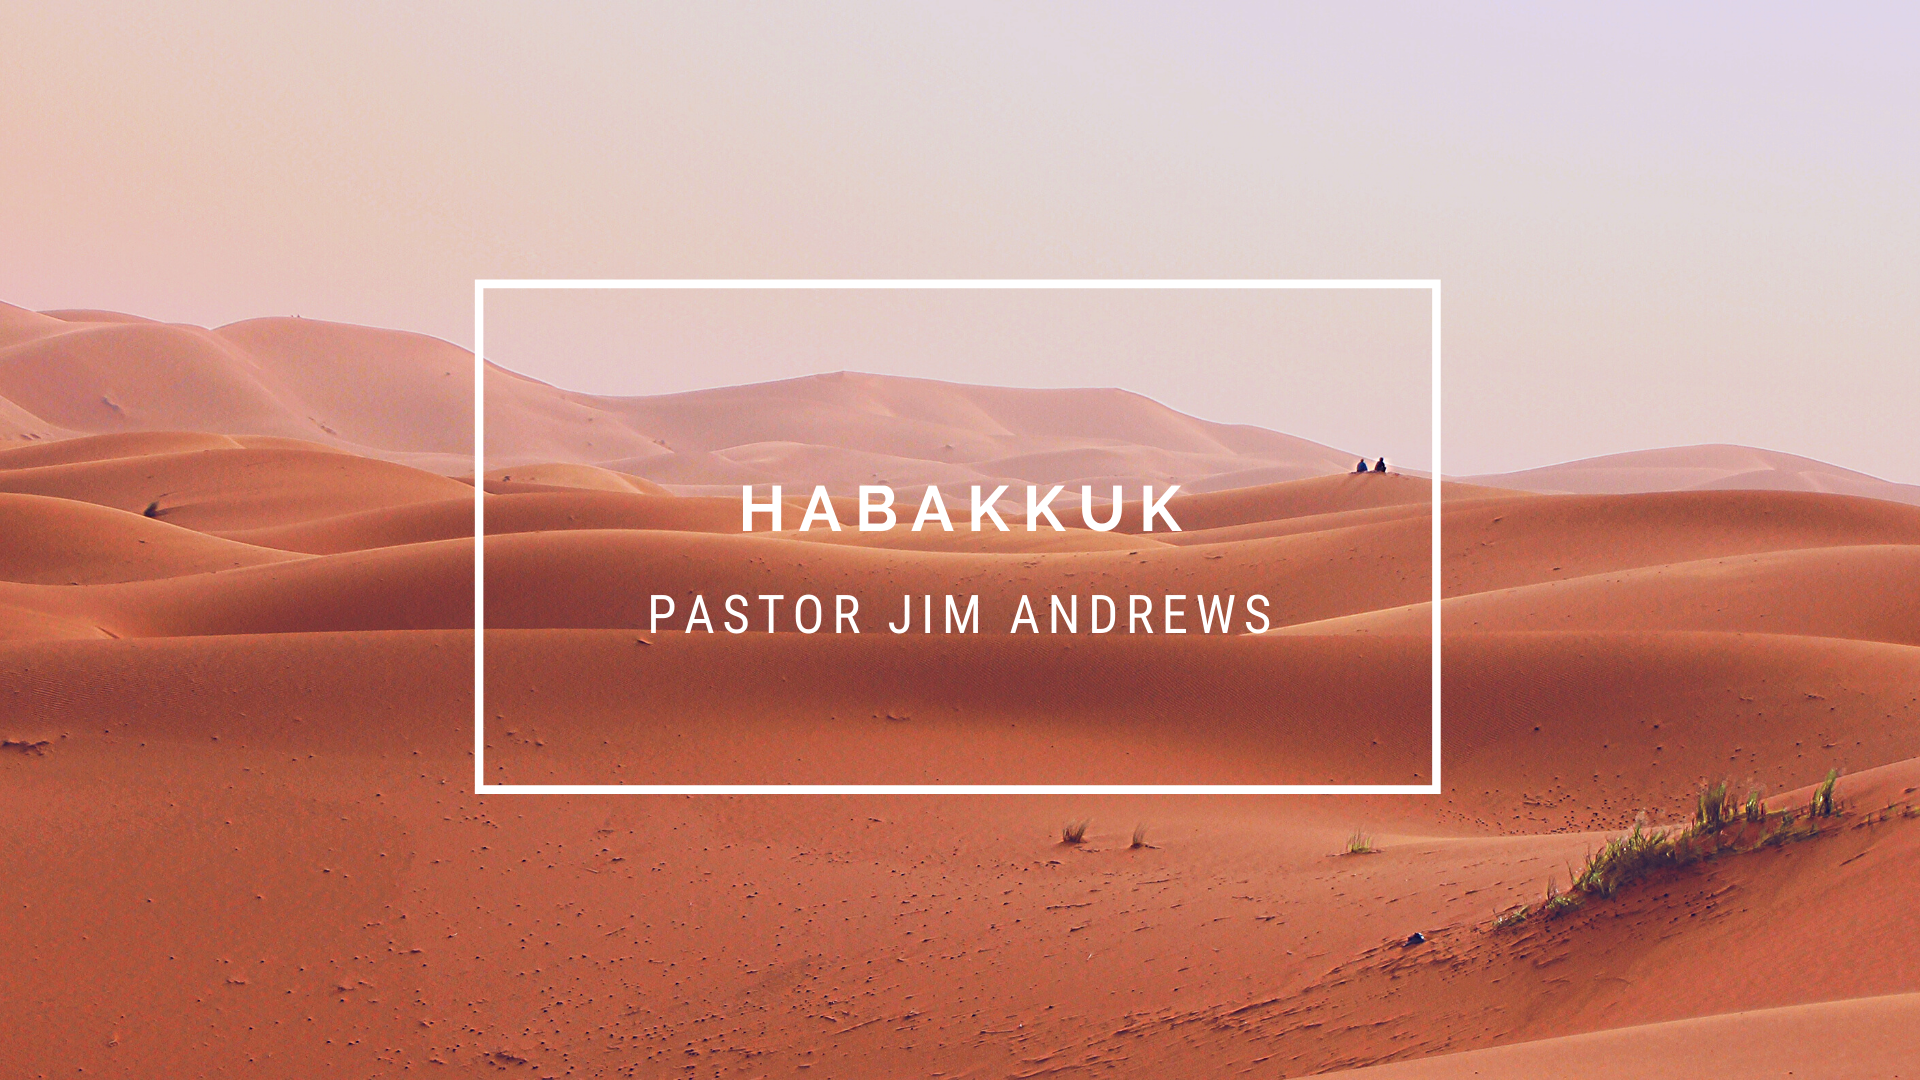 Habakkuk 2:1-3